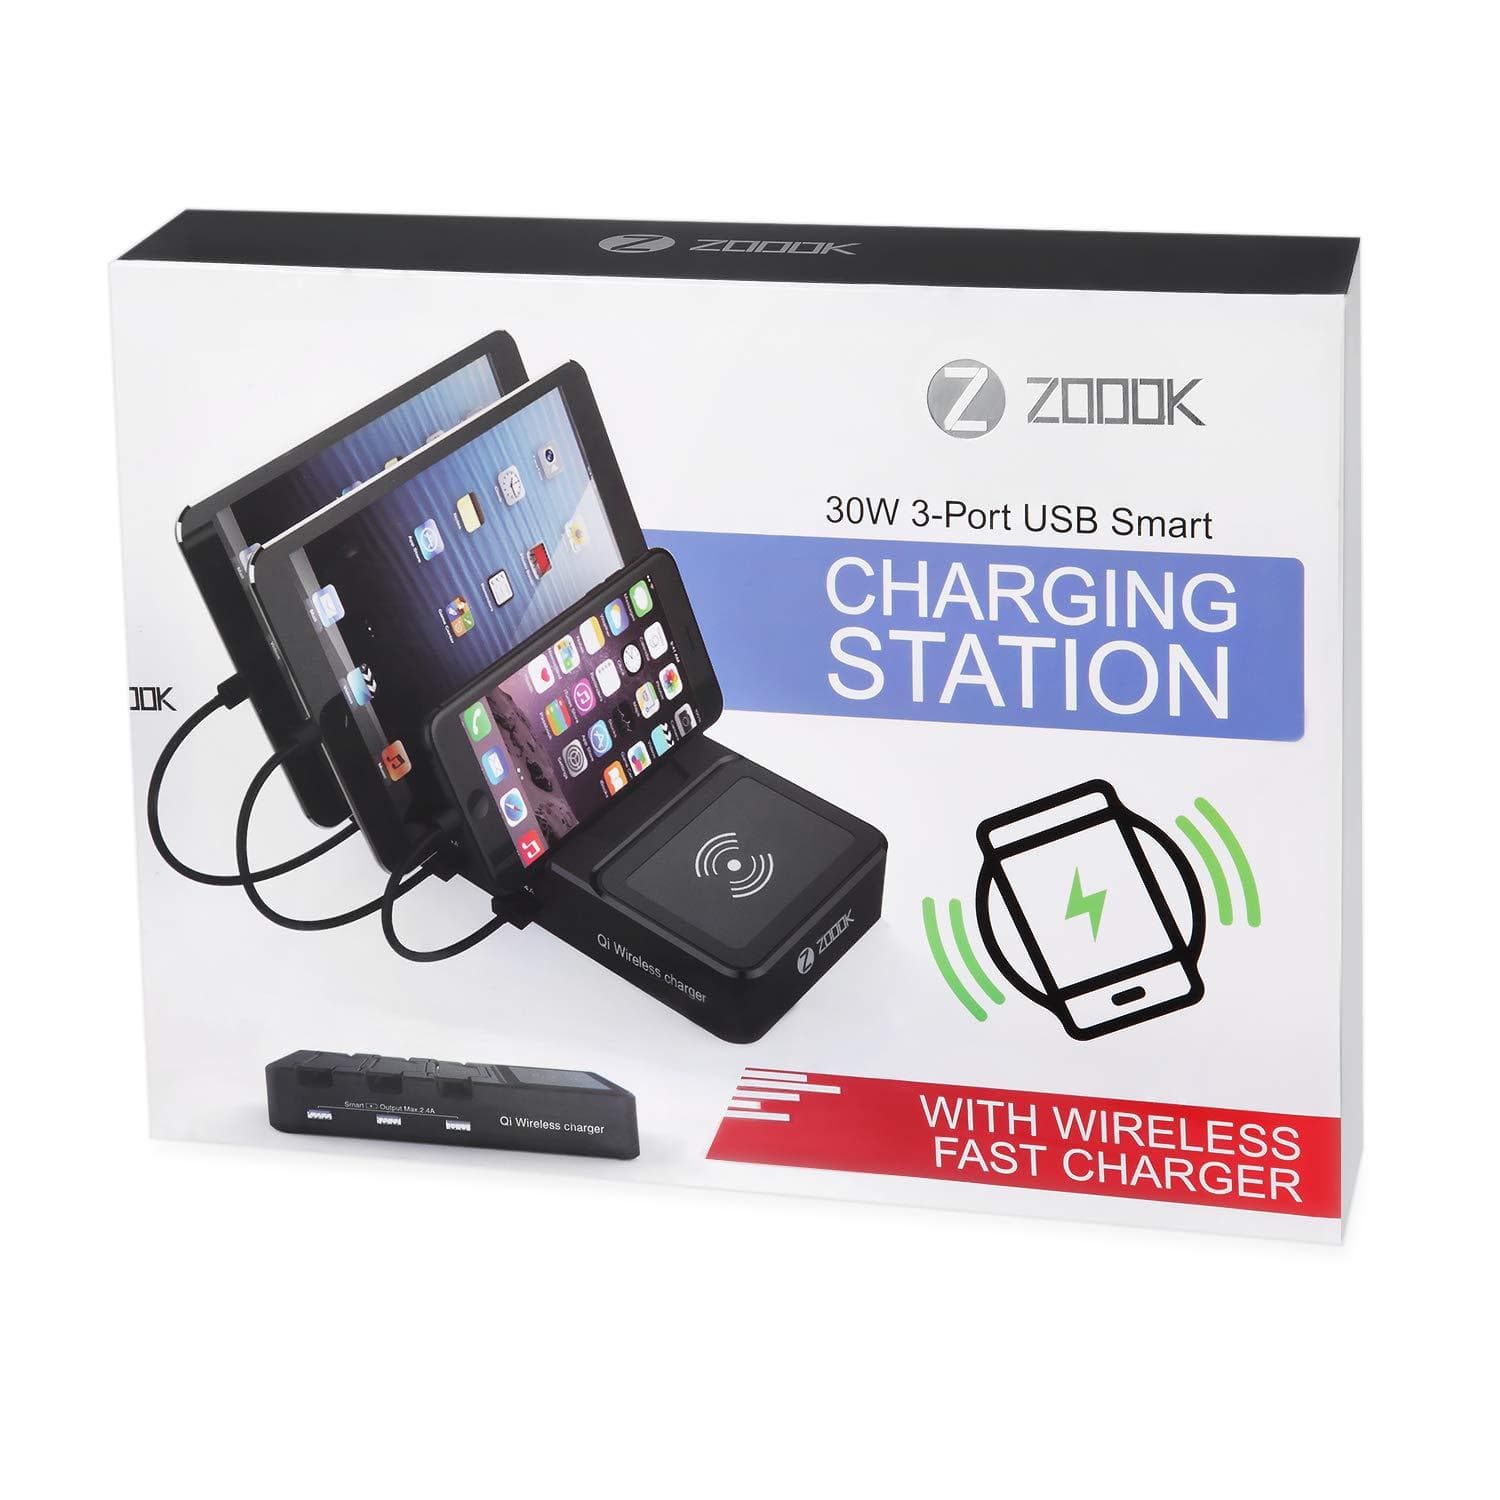 Zoook 3-Port USB + Qi Wireless Fast Charging Docking Station